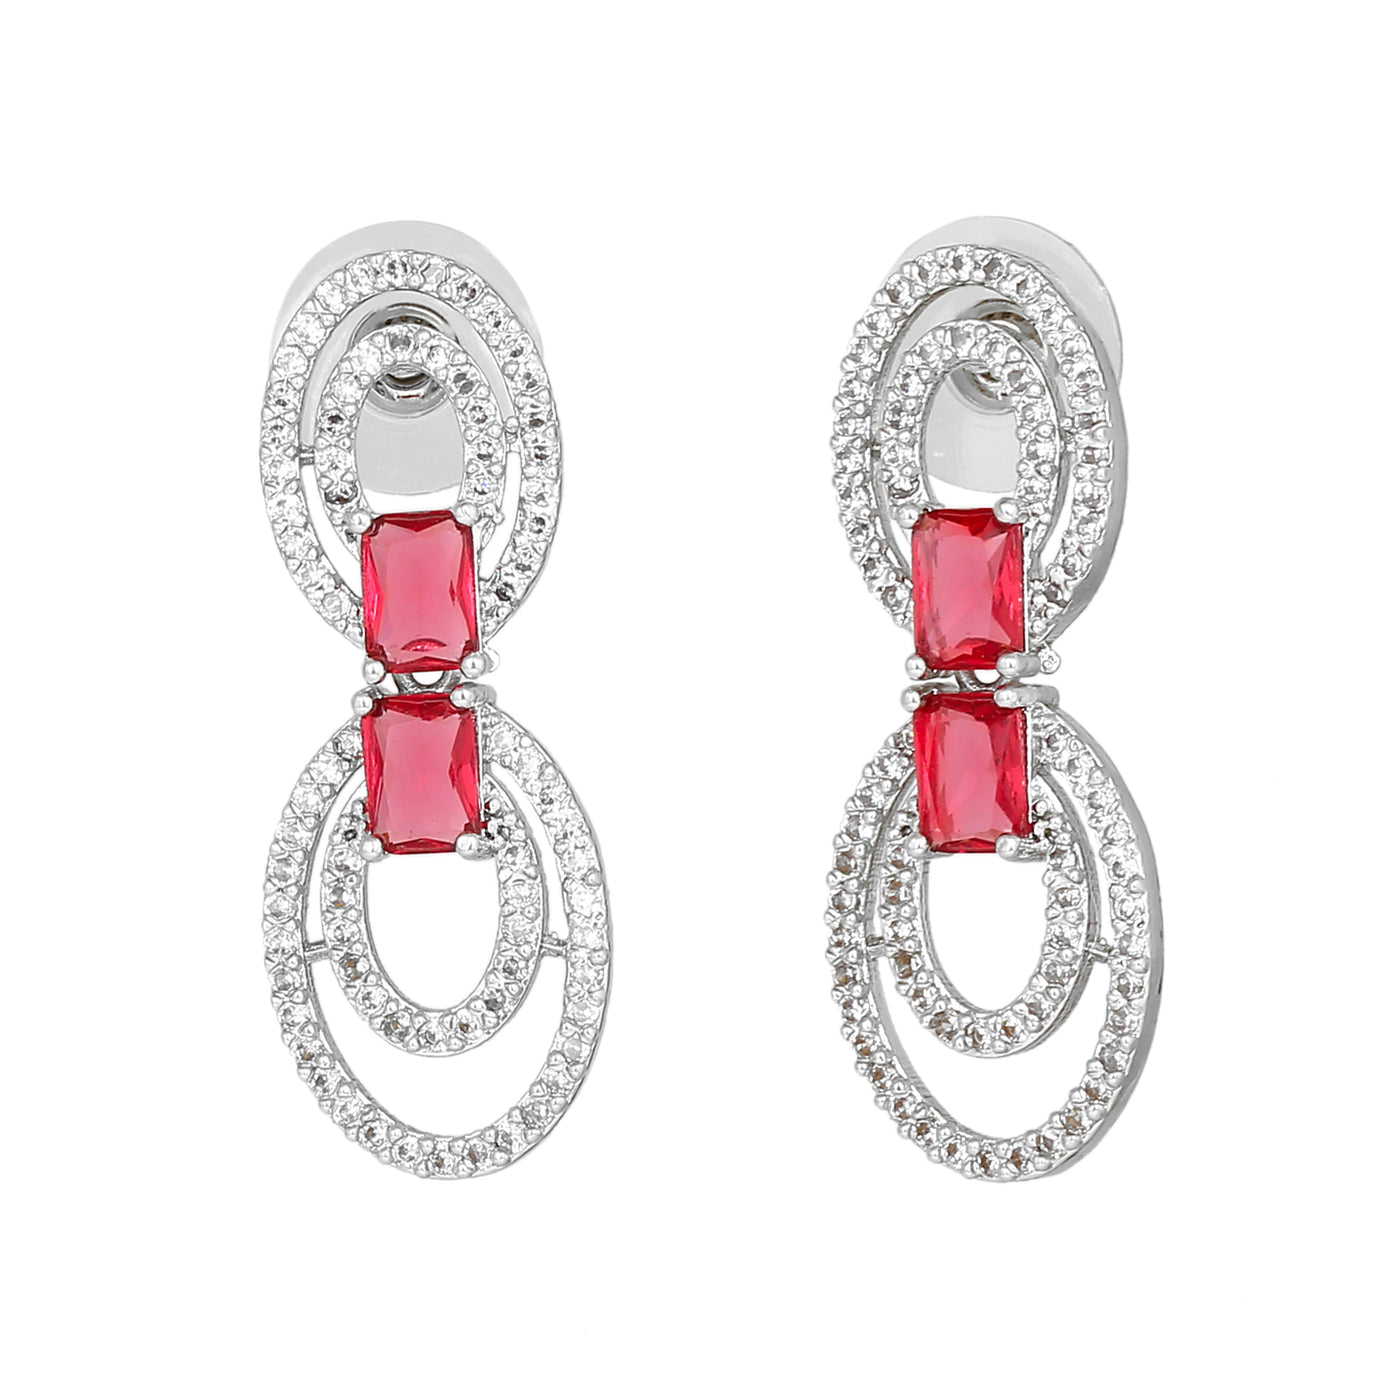 Estele Rhodium Plated CZ Circular Designer Drop Earrings with Tourmaline Pink Stones for Women